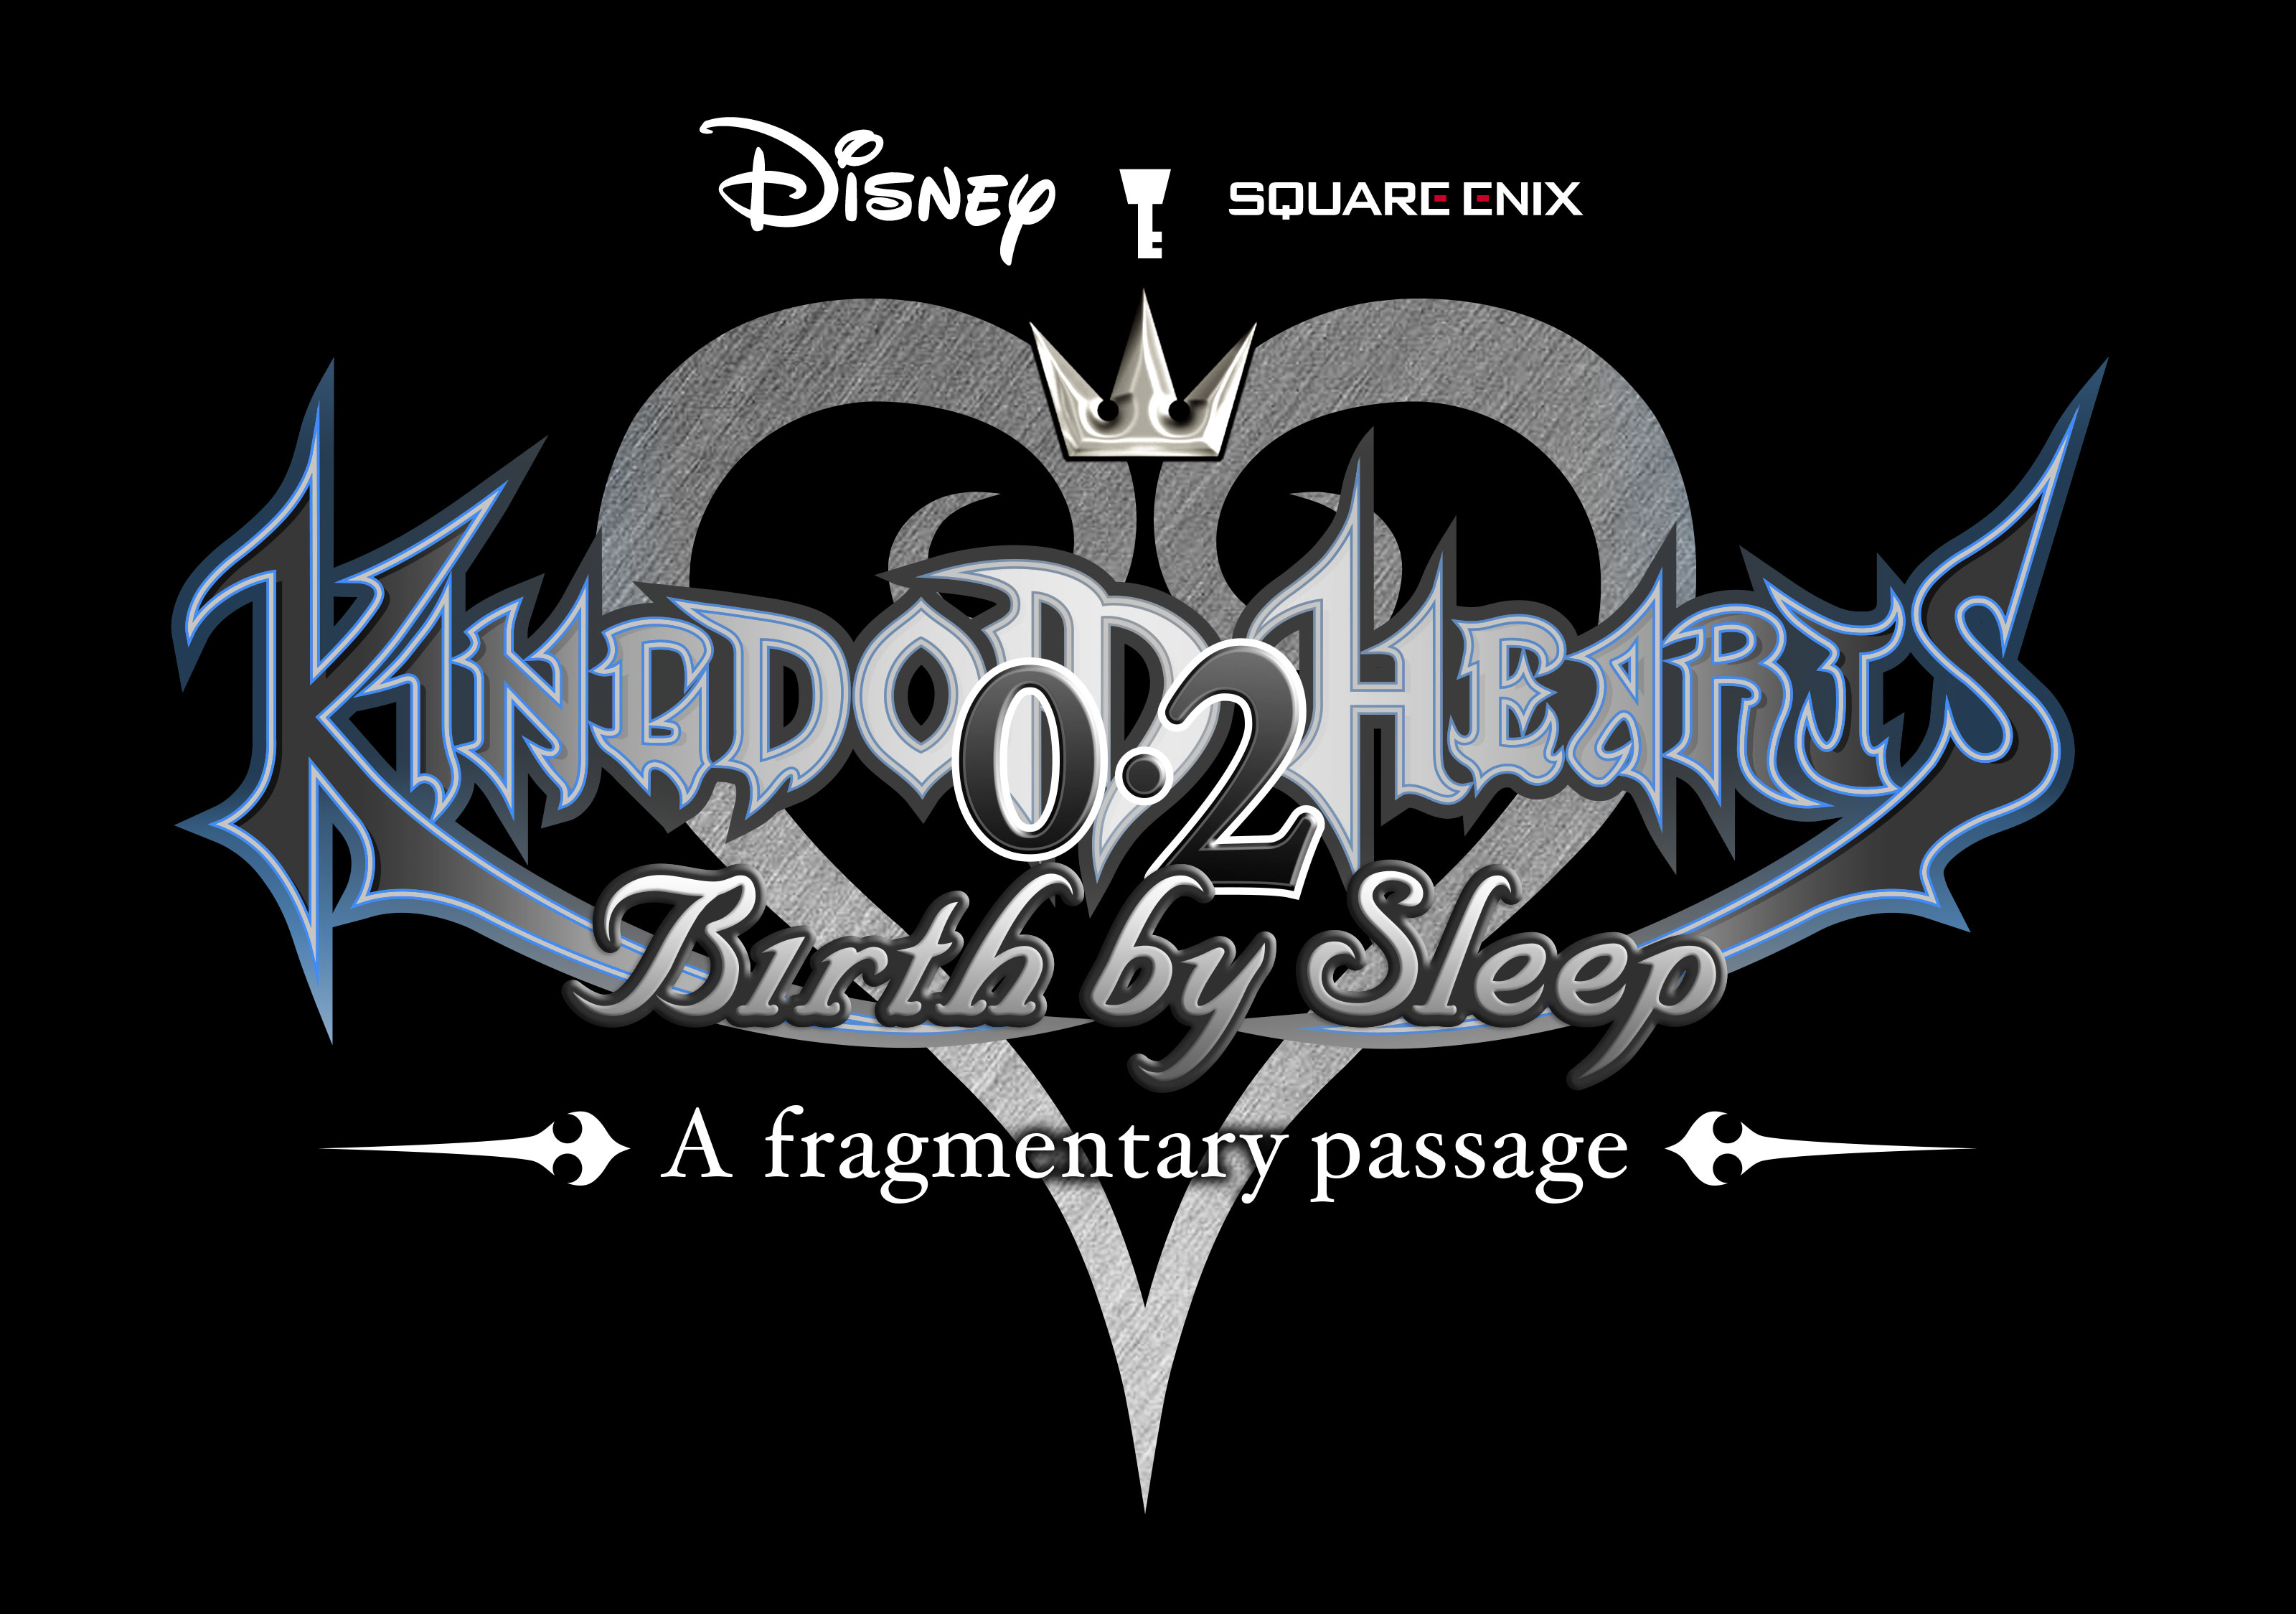 Kingdom Hearts 0.2 Birth by Sleep -A fragmentary passage 